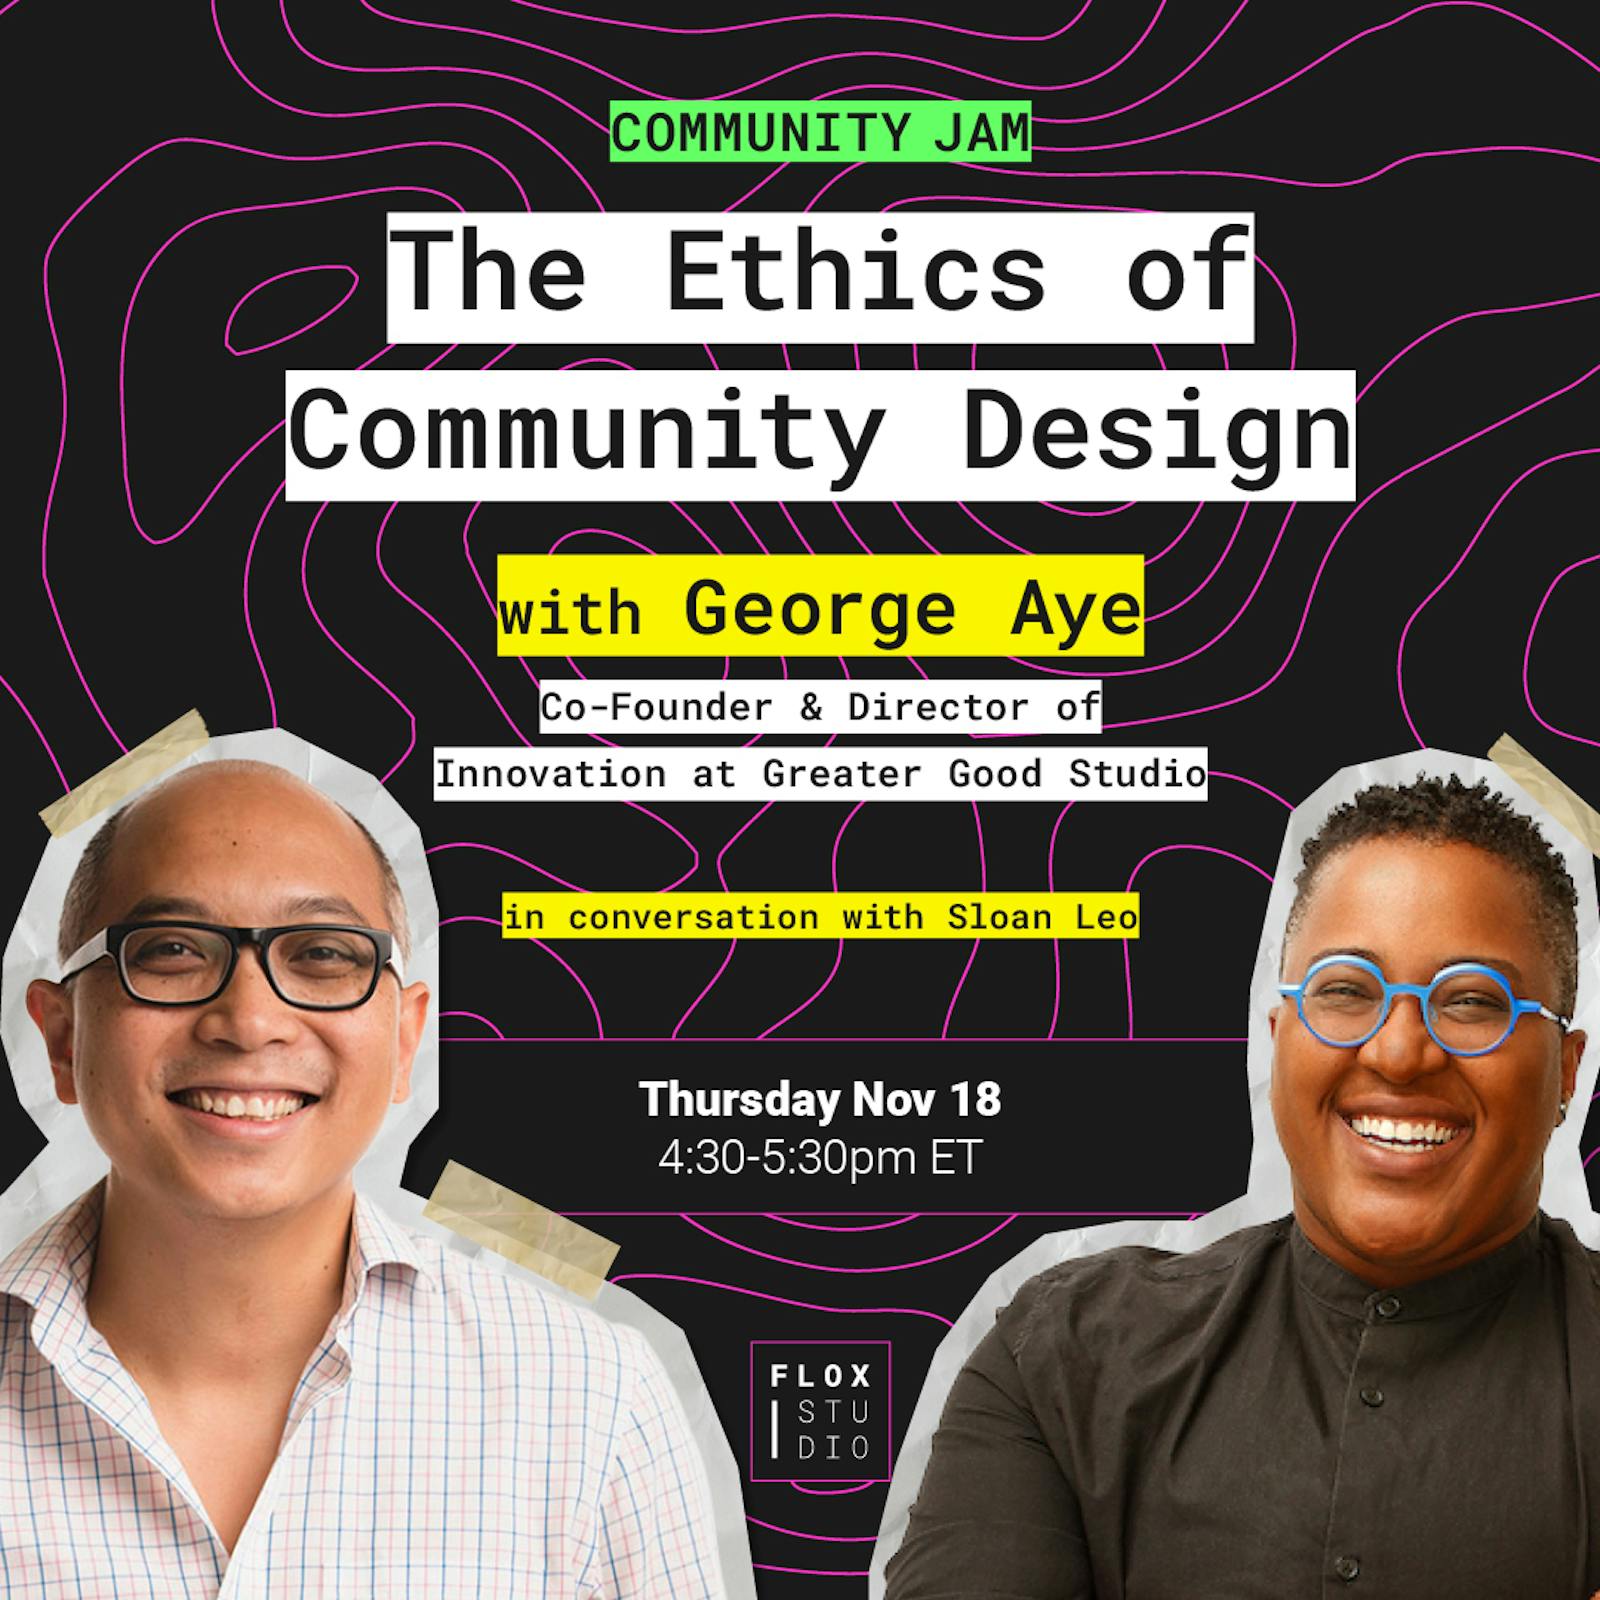 Community Jam: The Ethics of Community Design